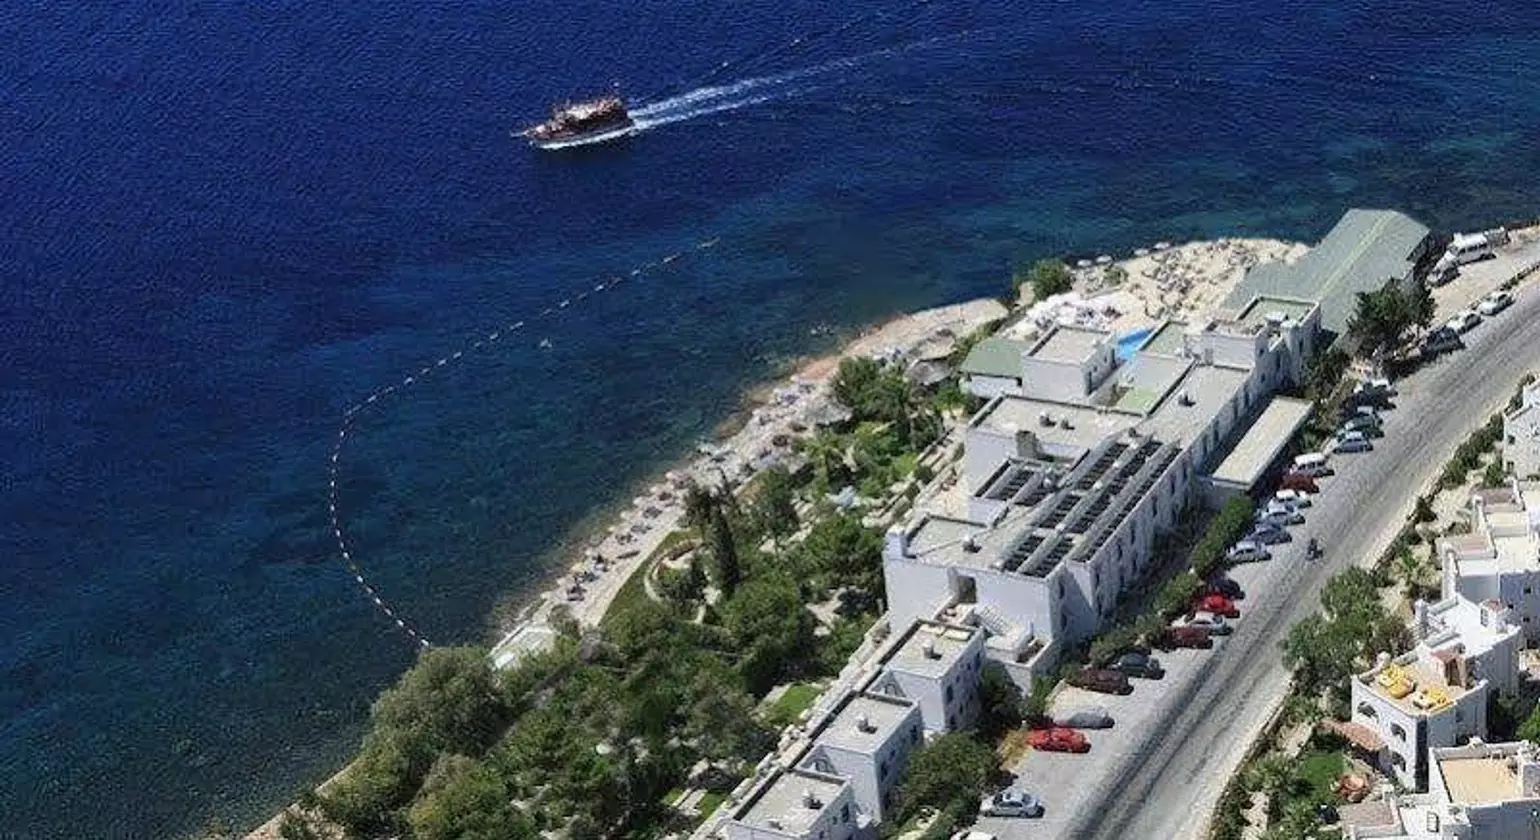 Chronos Beach Hotel Akyarlar